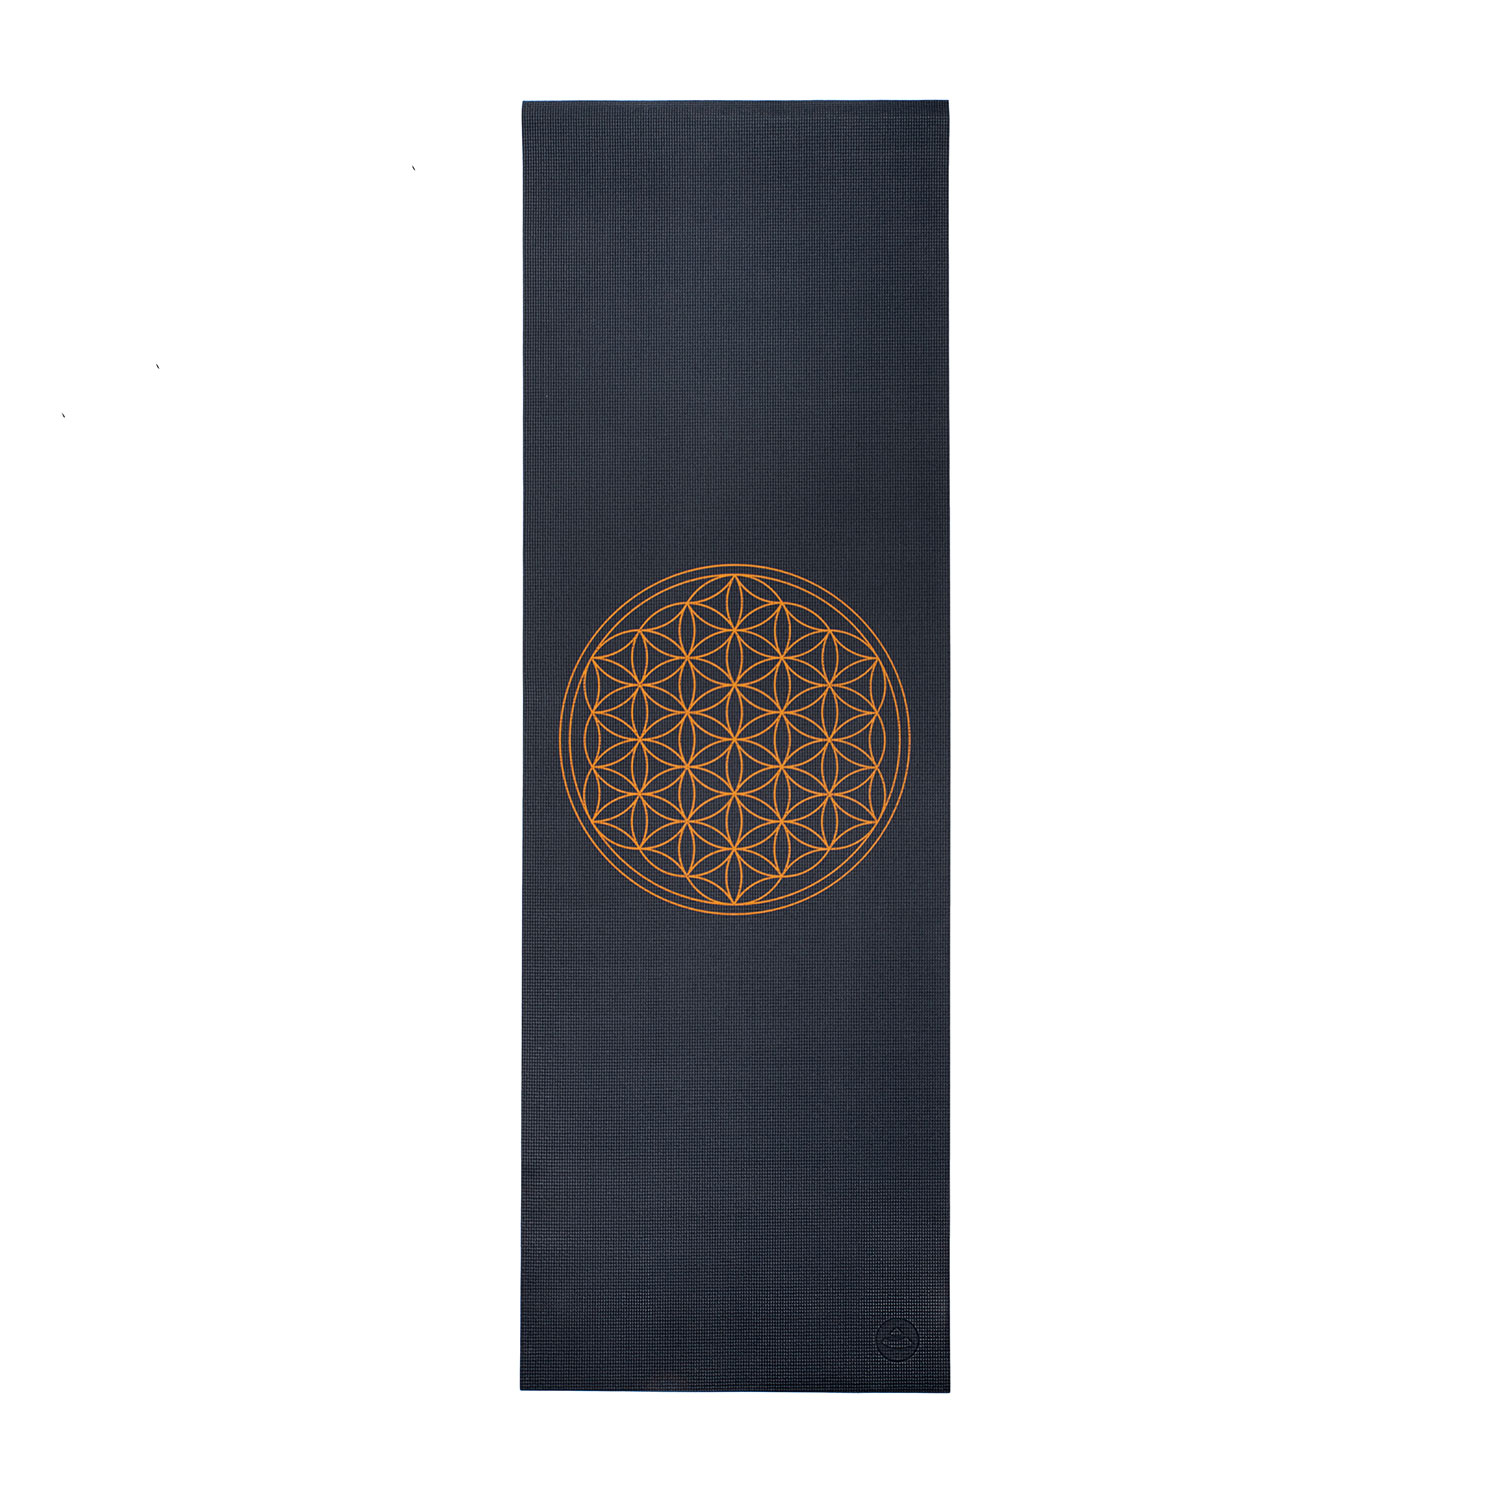 Bodhi Yoga Bodhi Leela Flower of life jóga podložka Květ života šedá (antracit) 183 x 60 cm x 4 mm